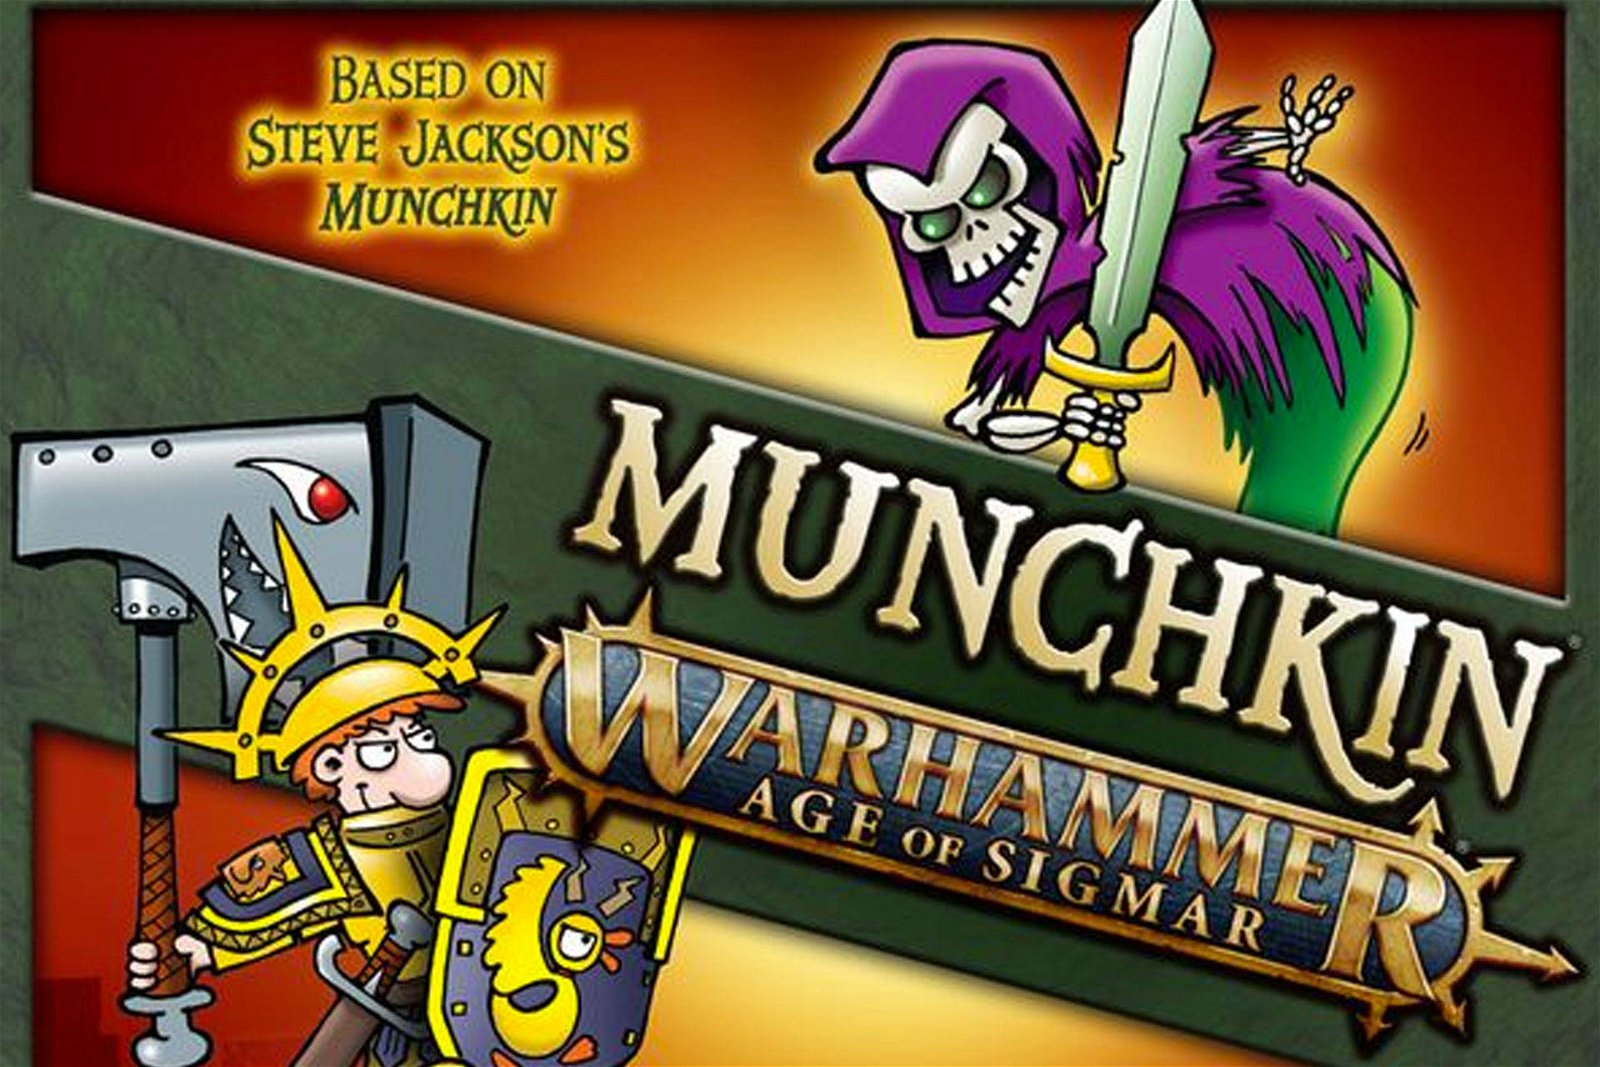 Immagine di Munchkin Warhammer Age of Sigmar in arrivo con Steve Jackson Games e Games Workshop